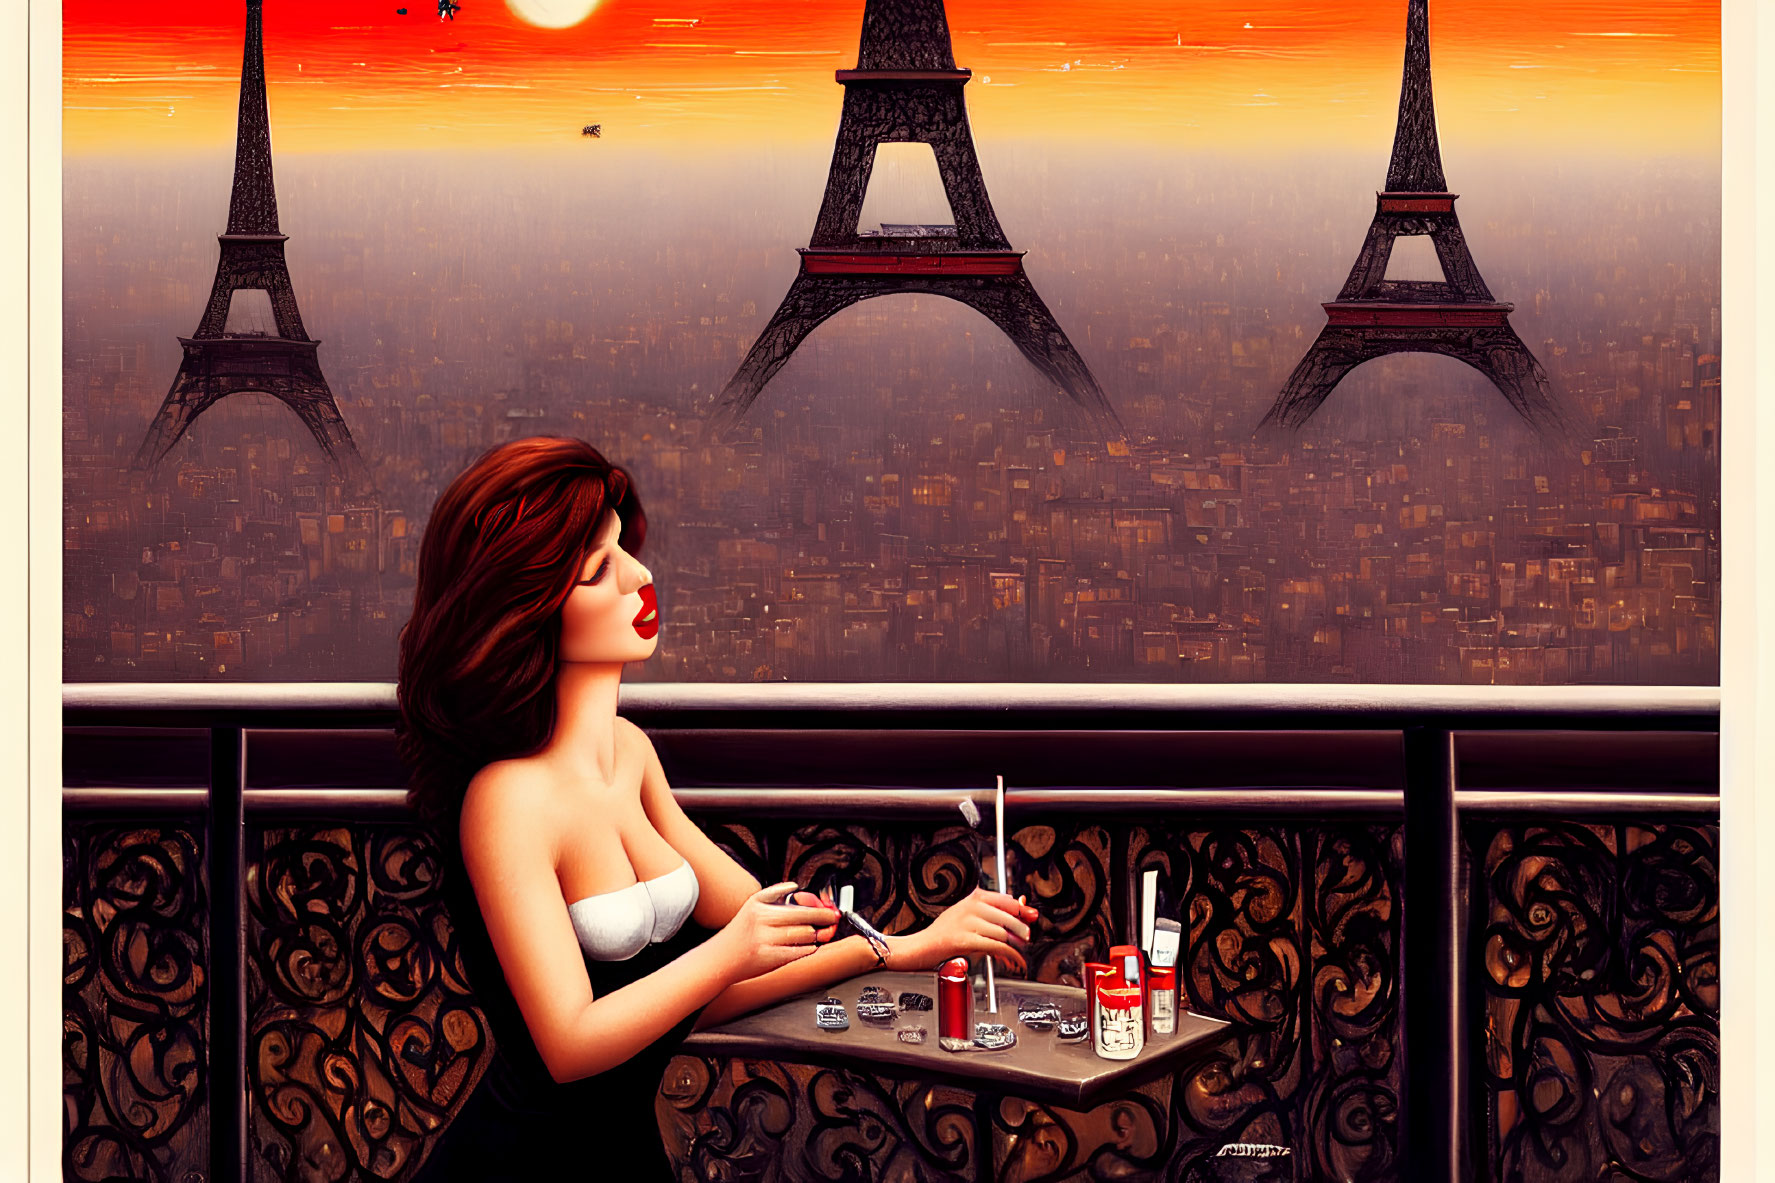 Illustration of woman at table with nail polish, surreal Paris sunset backdrop.